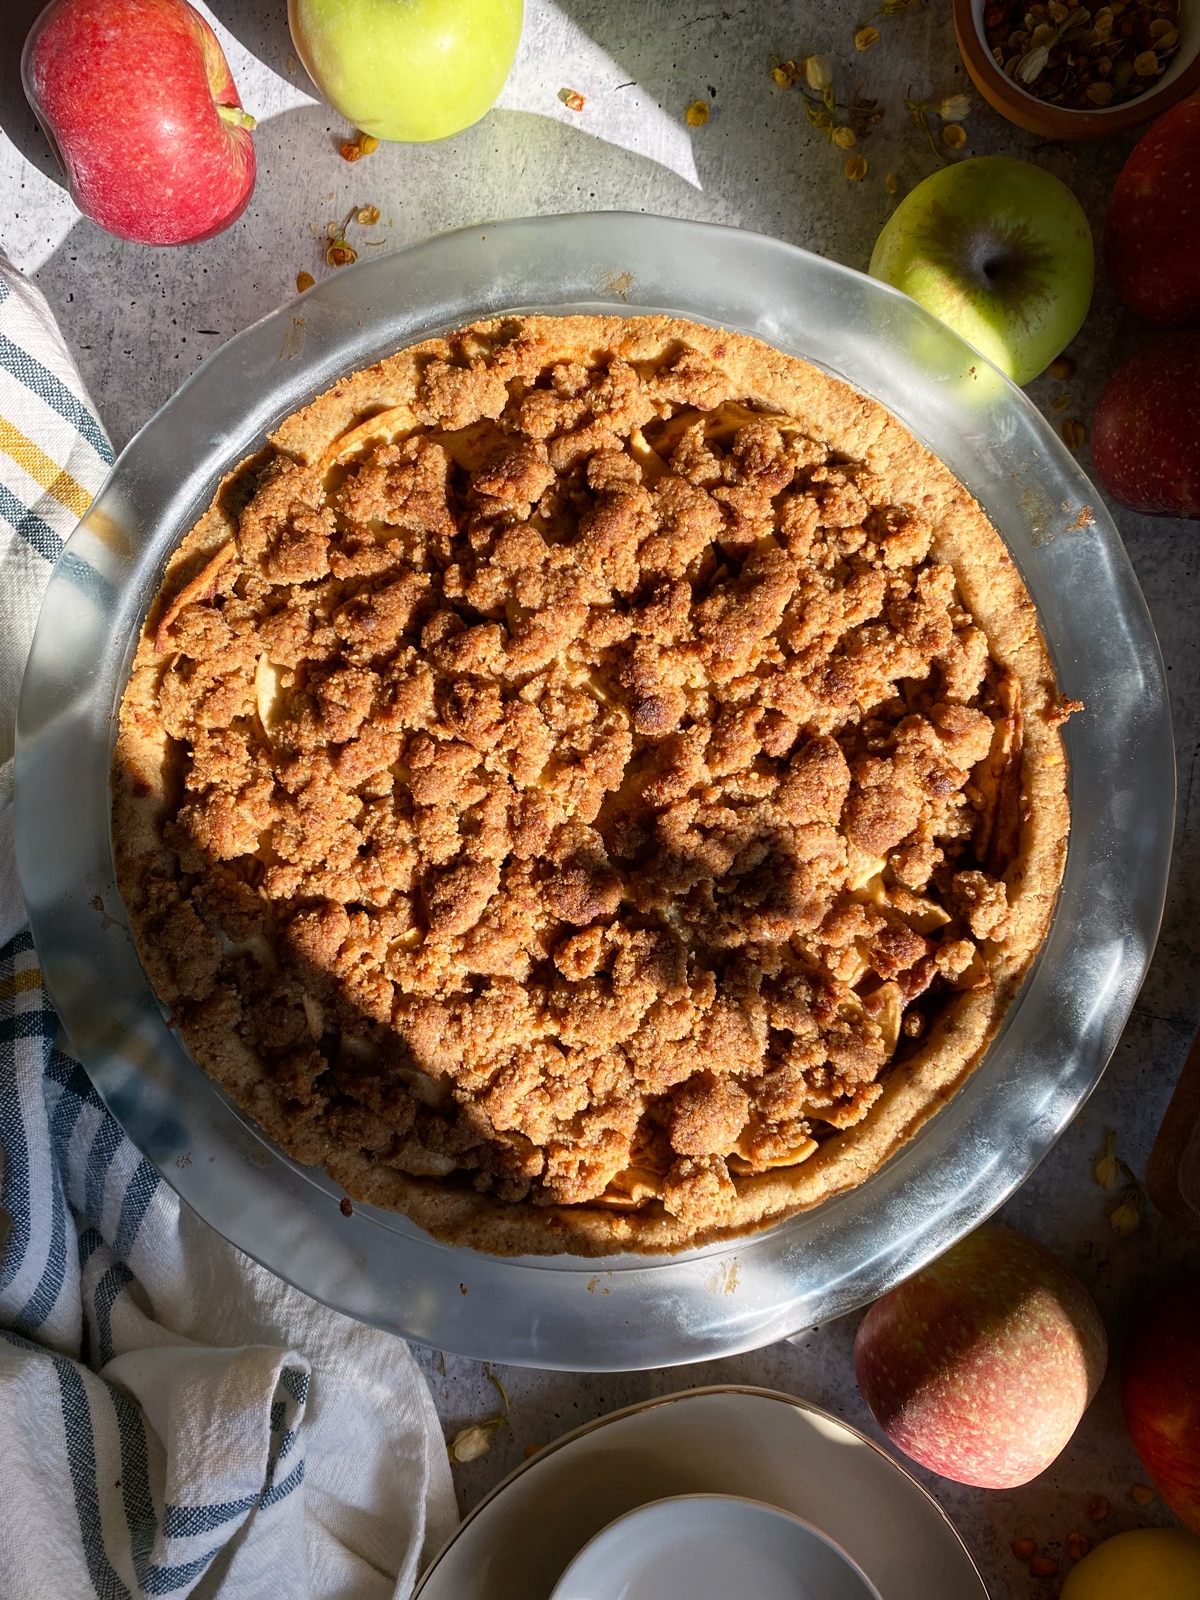 freshly baked apple pie